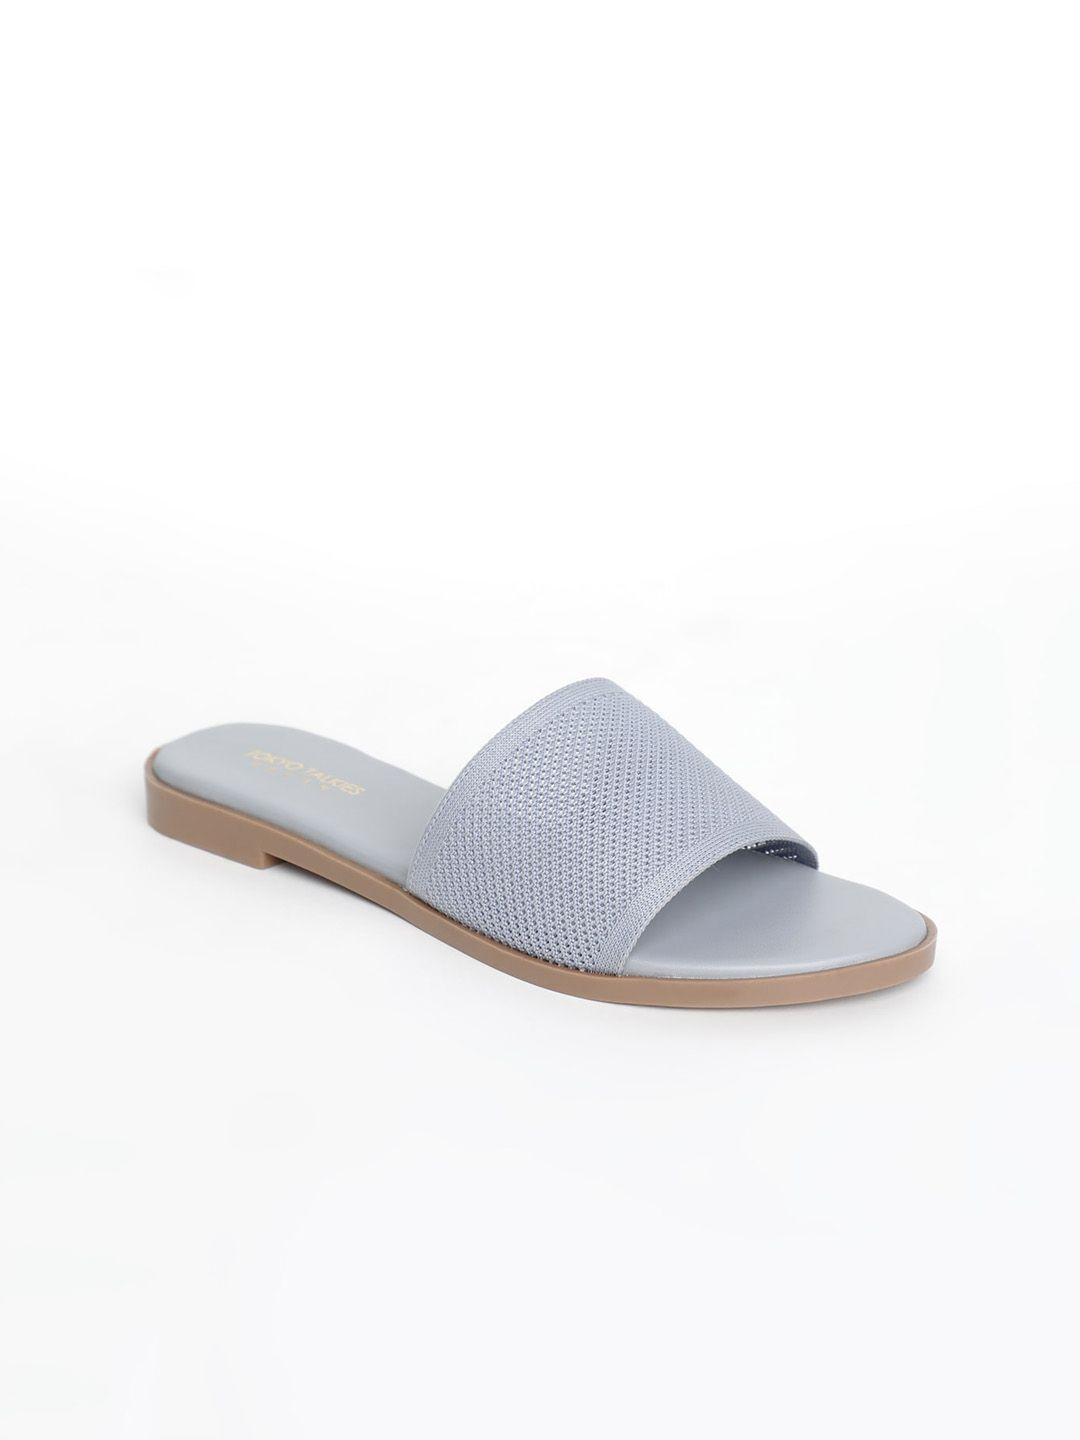 tokyo talkies women blue printed open toe flats